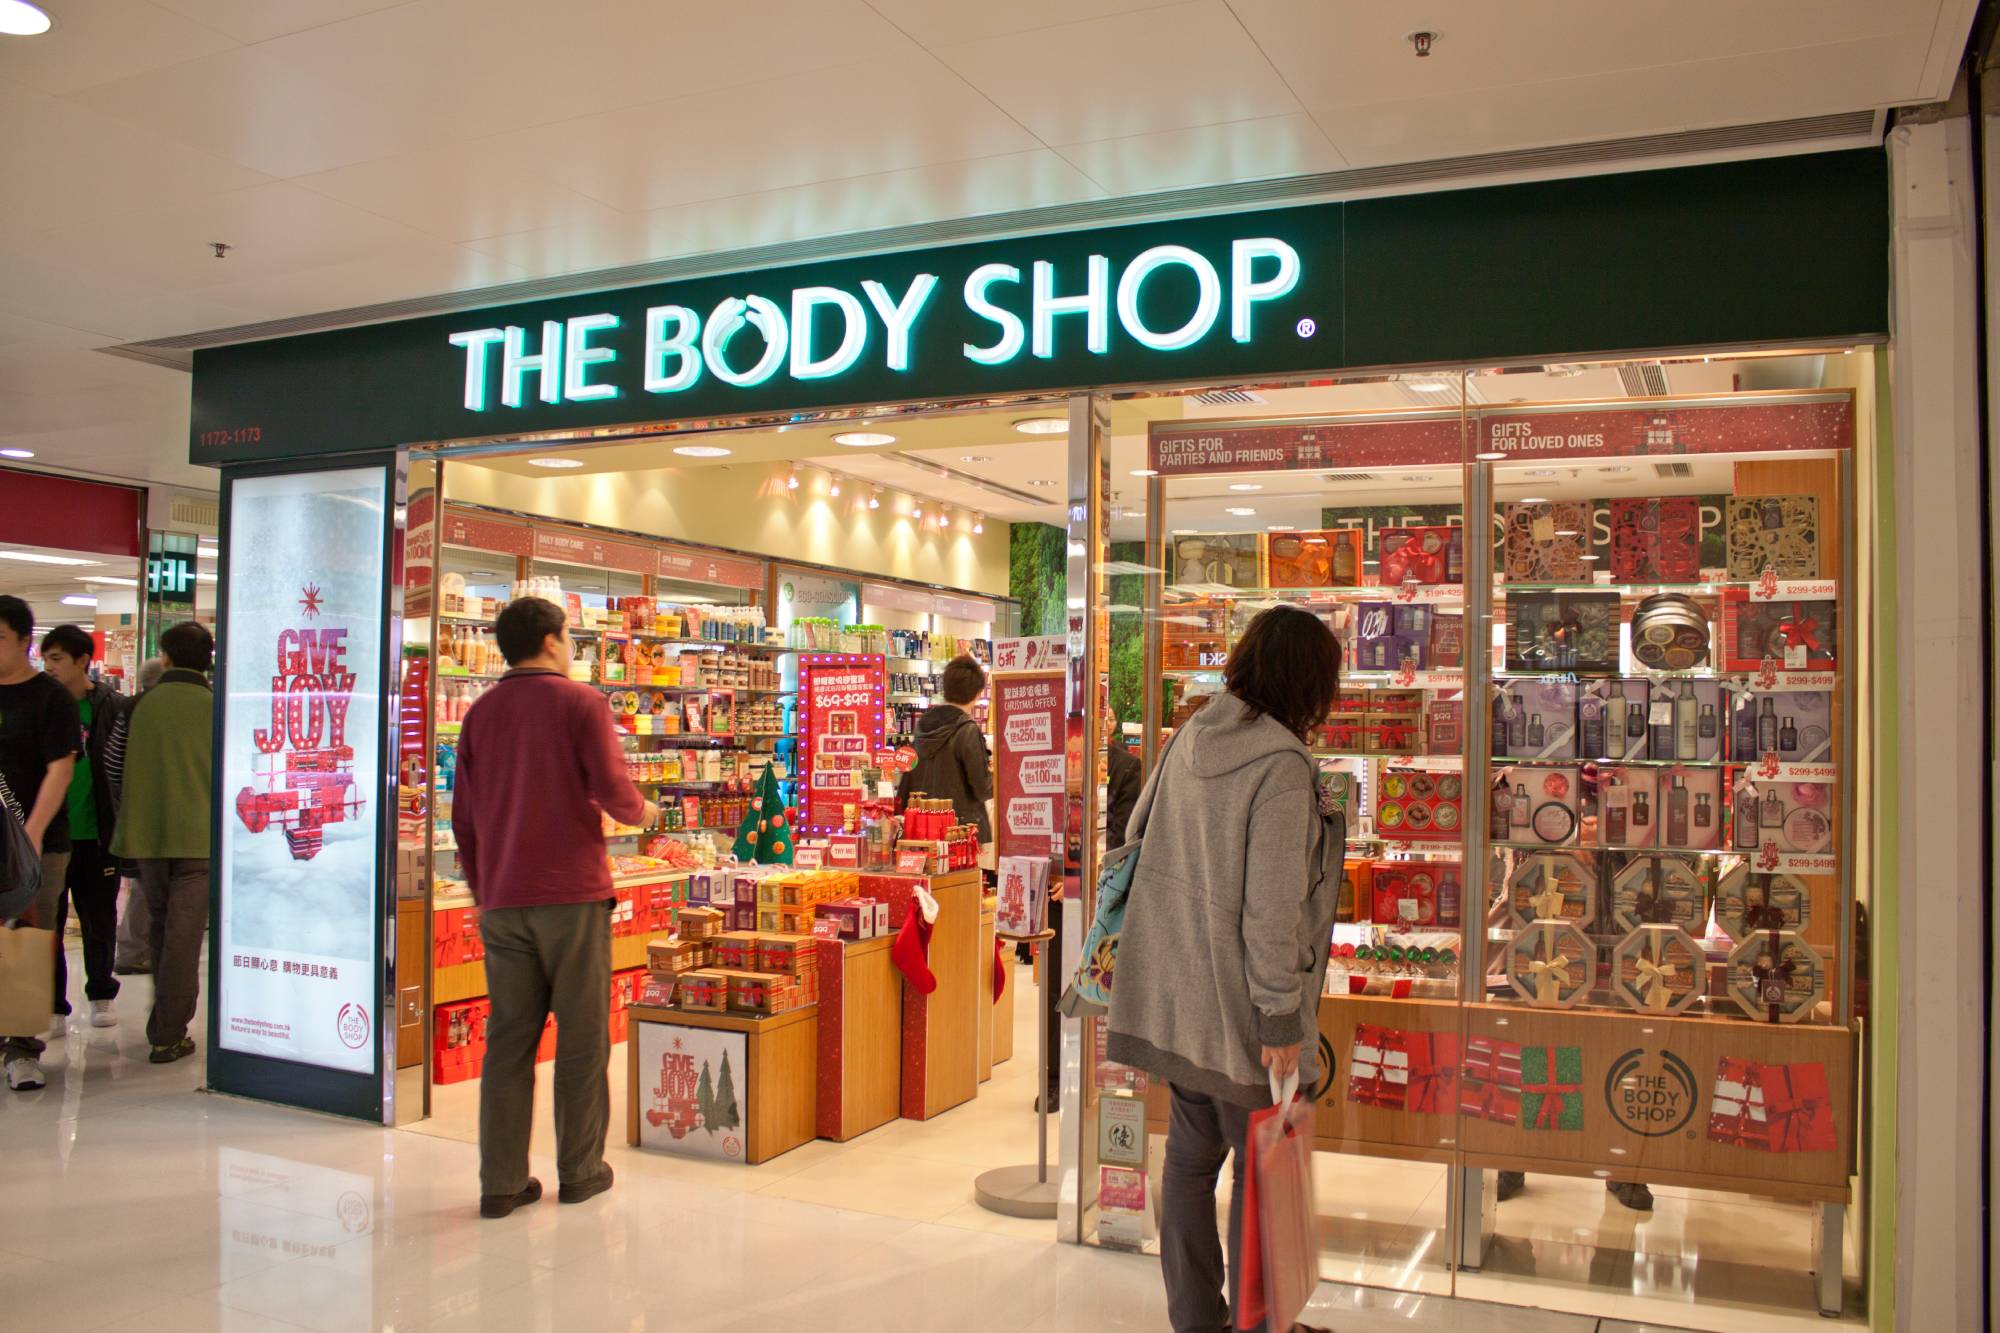 The body shop store in Hong Kong